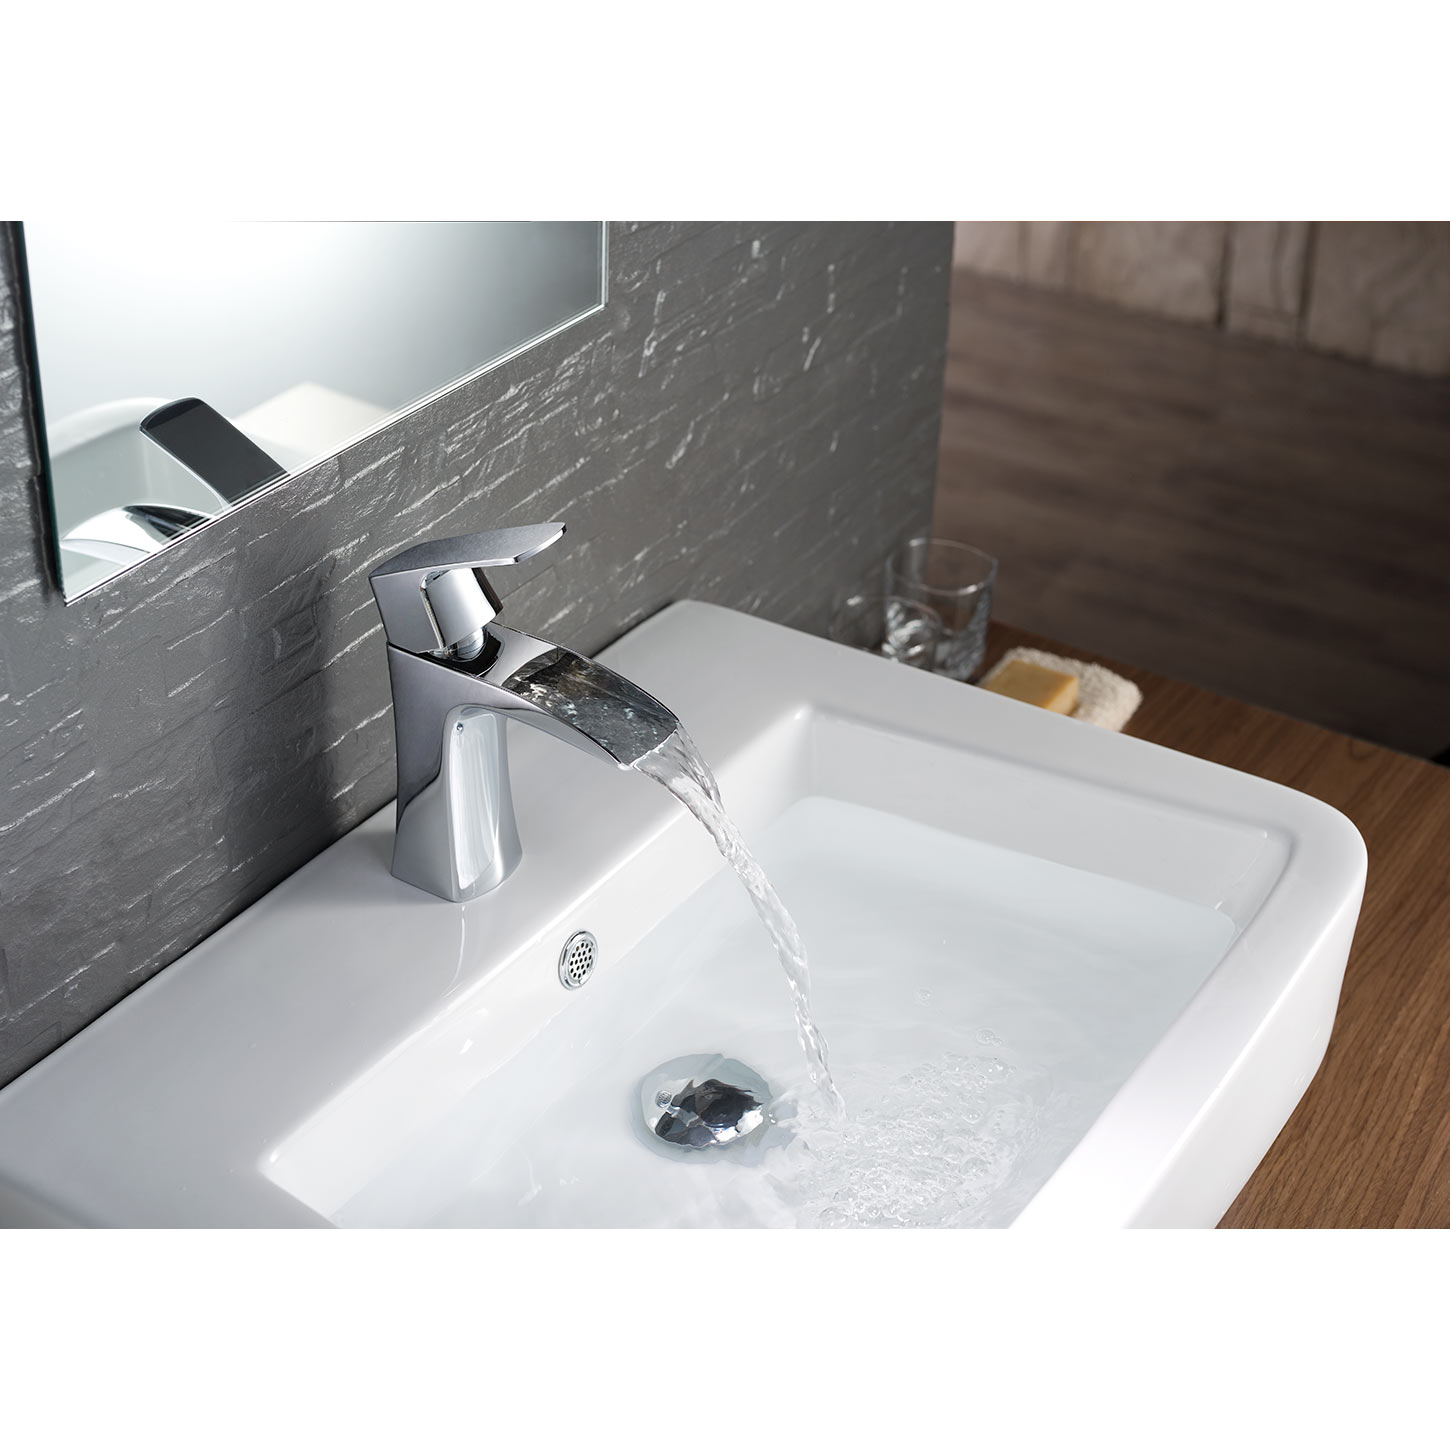 Buy CBI Rainier Single Control Bathroom Waterfall Faucet in Chrome  AV-BF02CH on